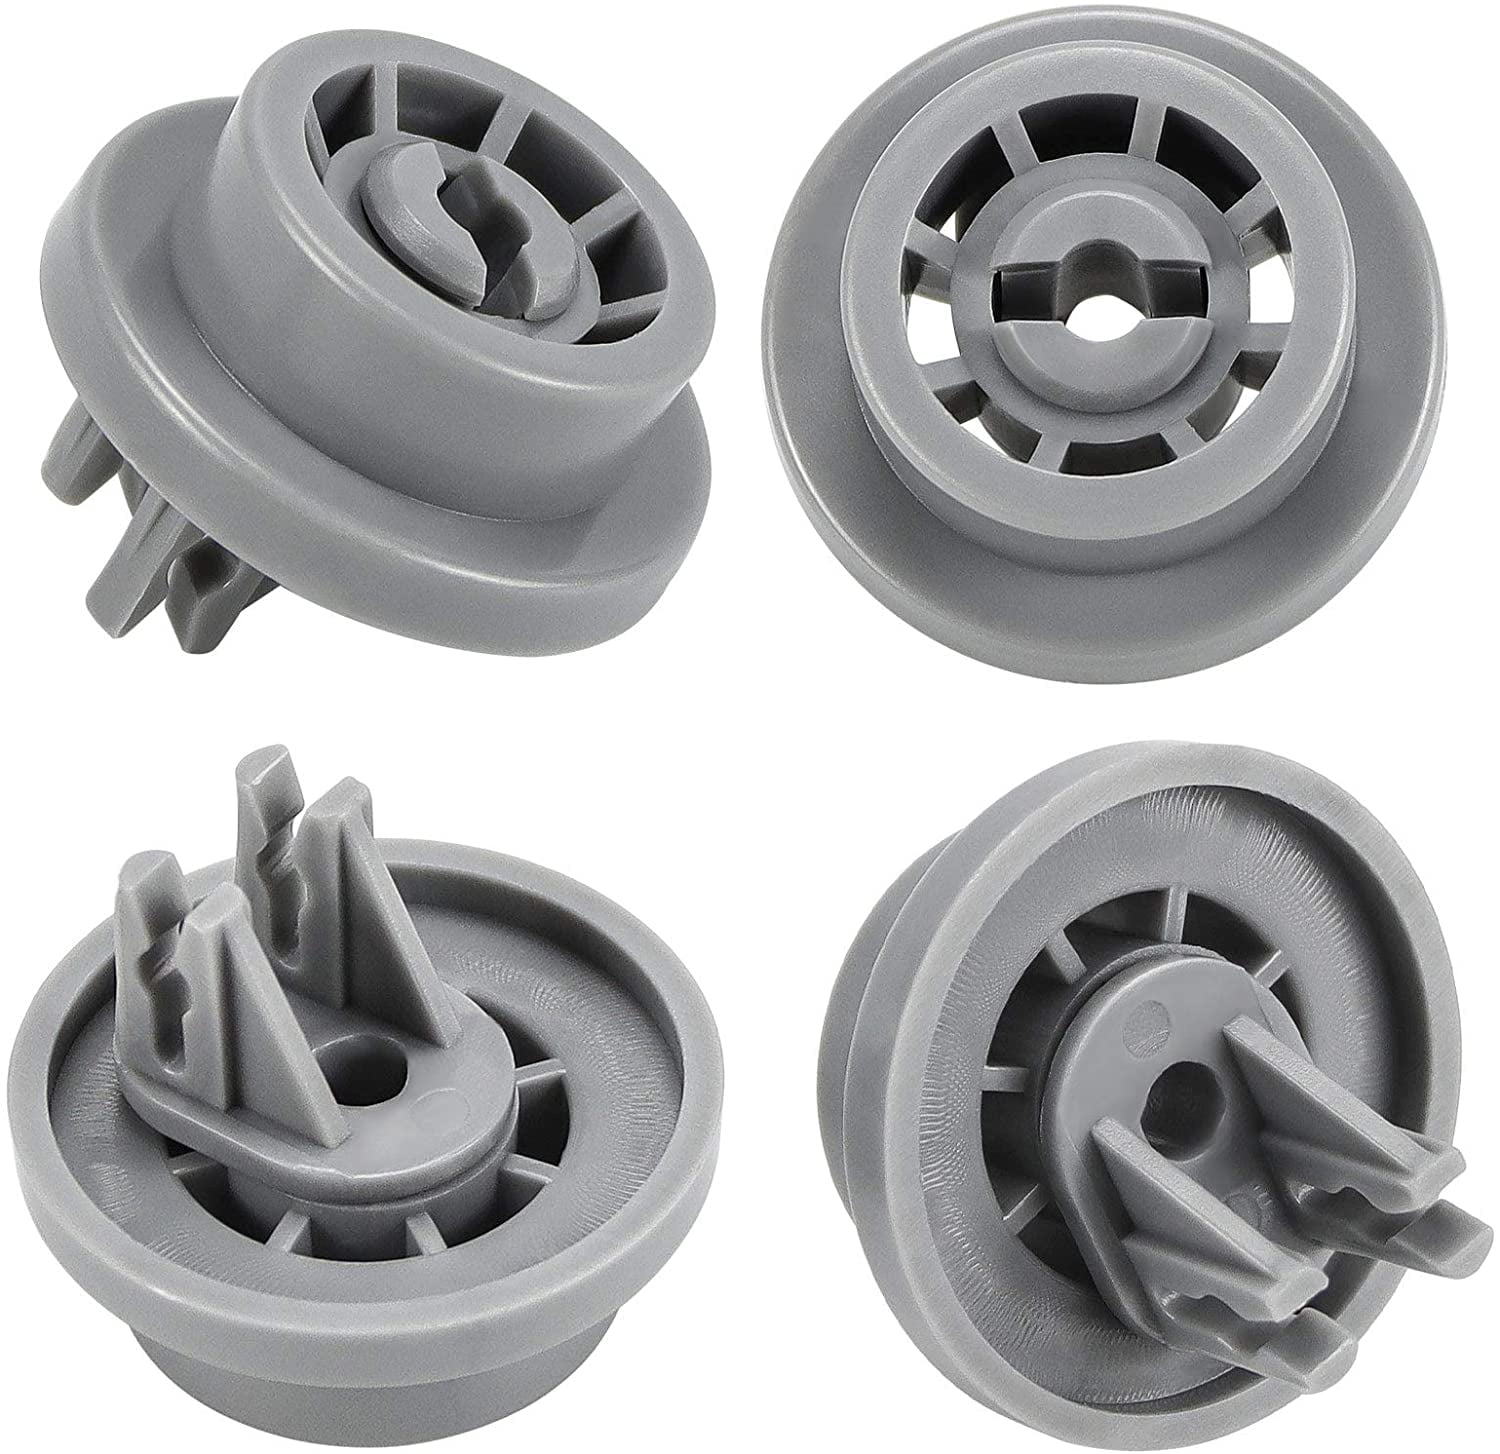 4x Dishwasher Lower Bottom Basket Roller Wheel For Bosch Neff & Siemens 165314 